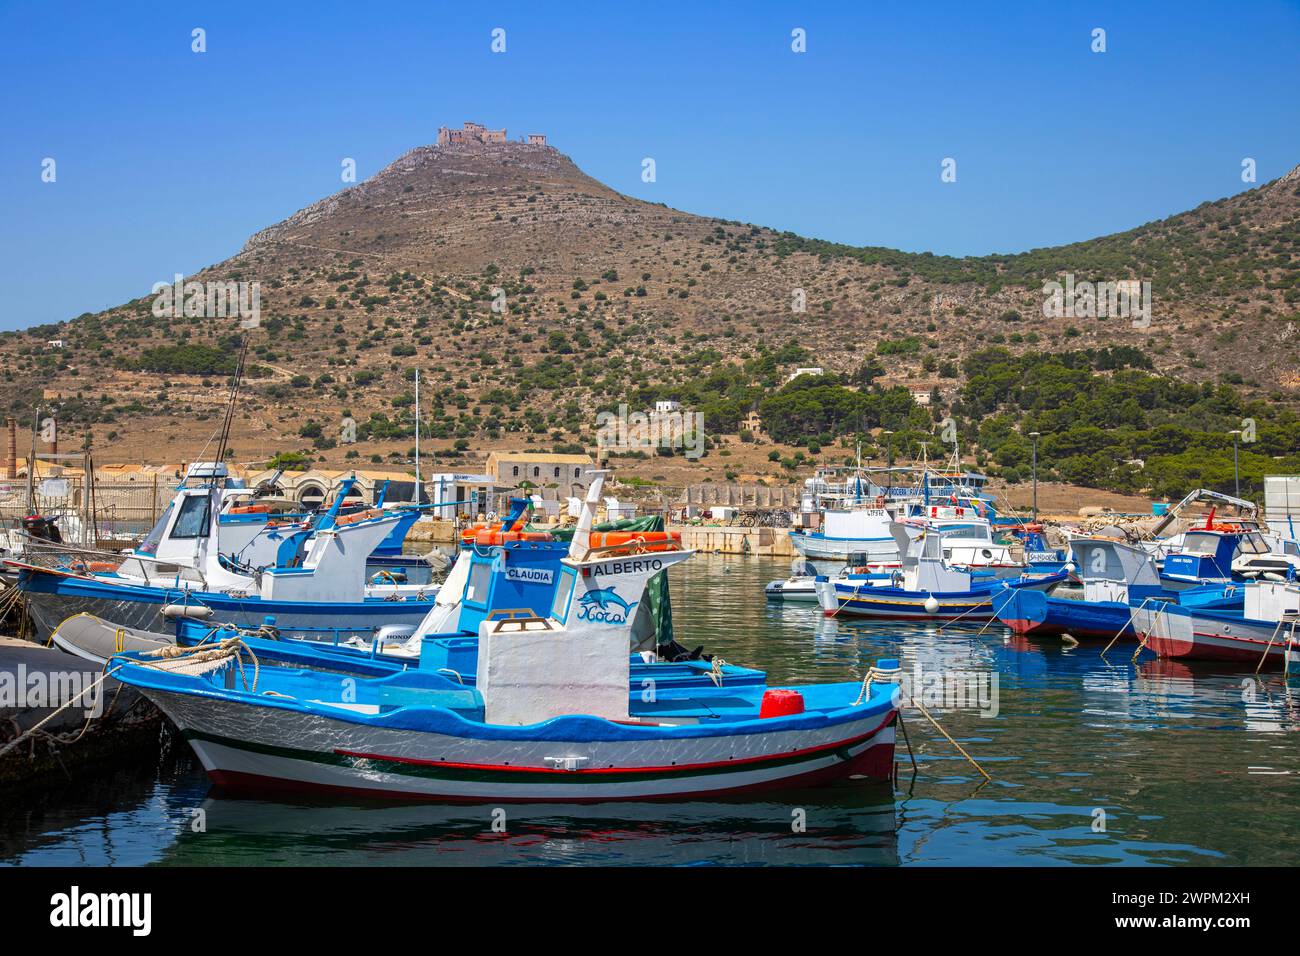 Fishing boats, Favignana, Aegadian Islands, province of Trapani, Sicily, Italy, Mediterranean, Europe Copyright: JohnxGuidi 1237-657 Stock Photo